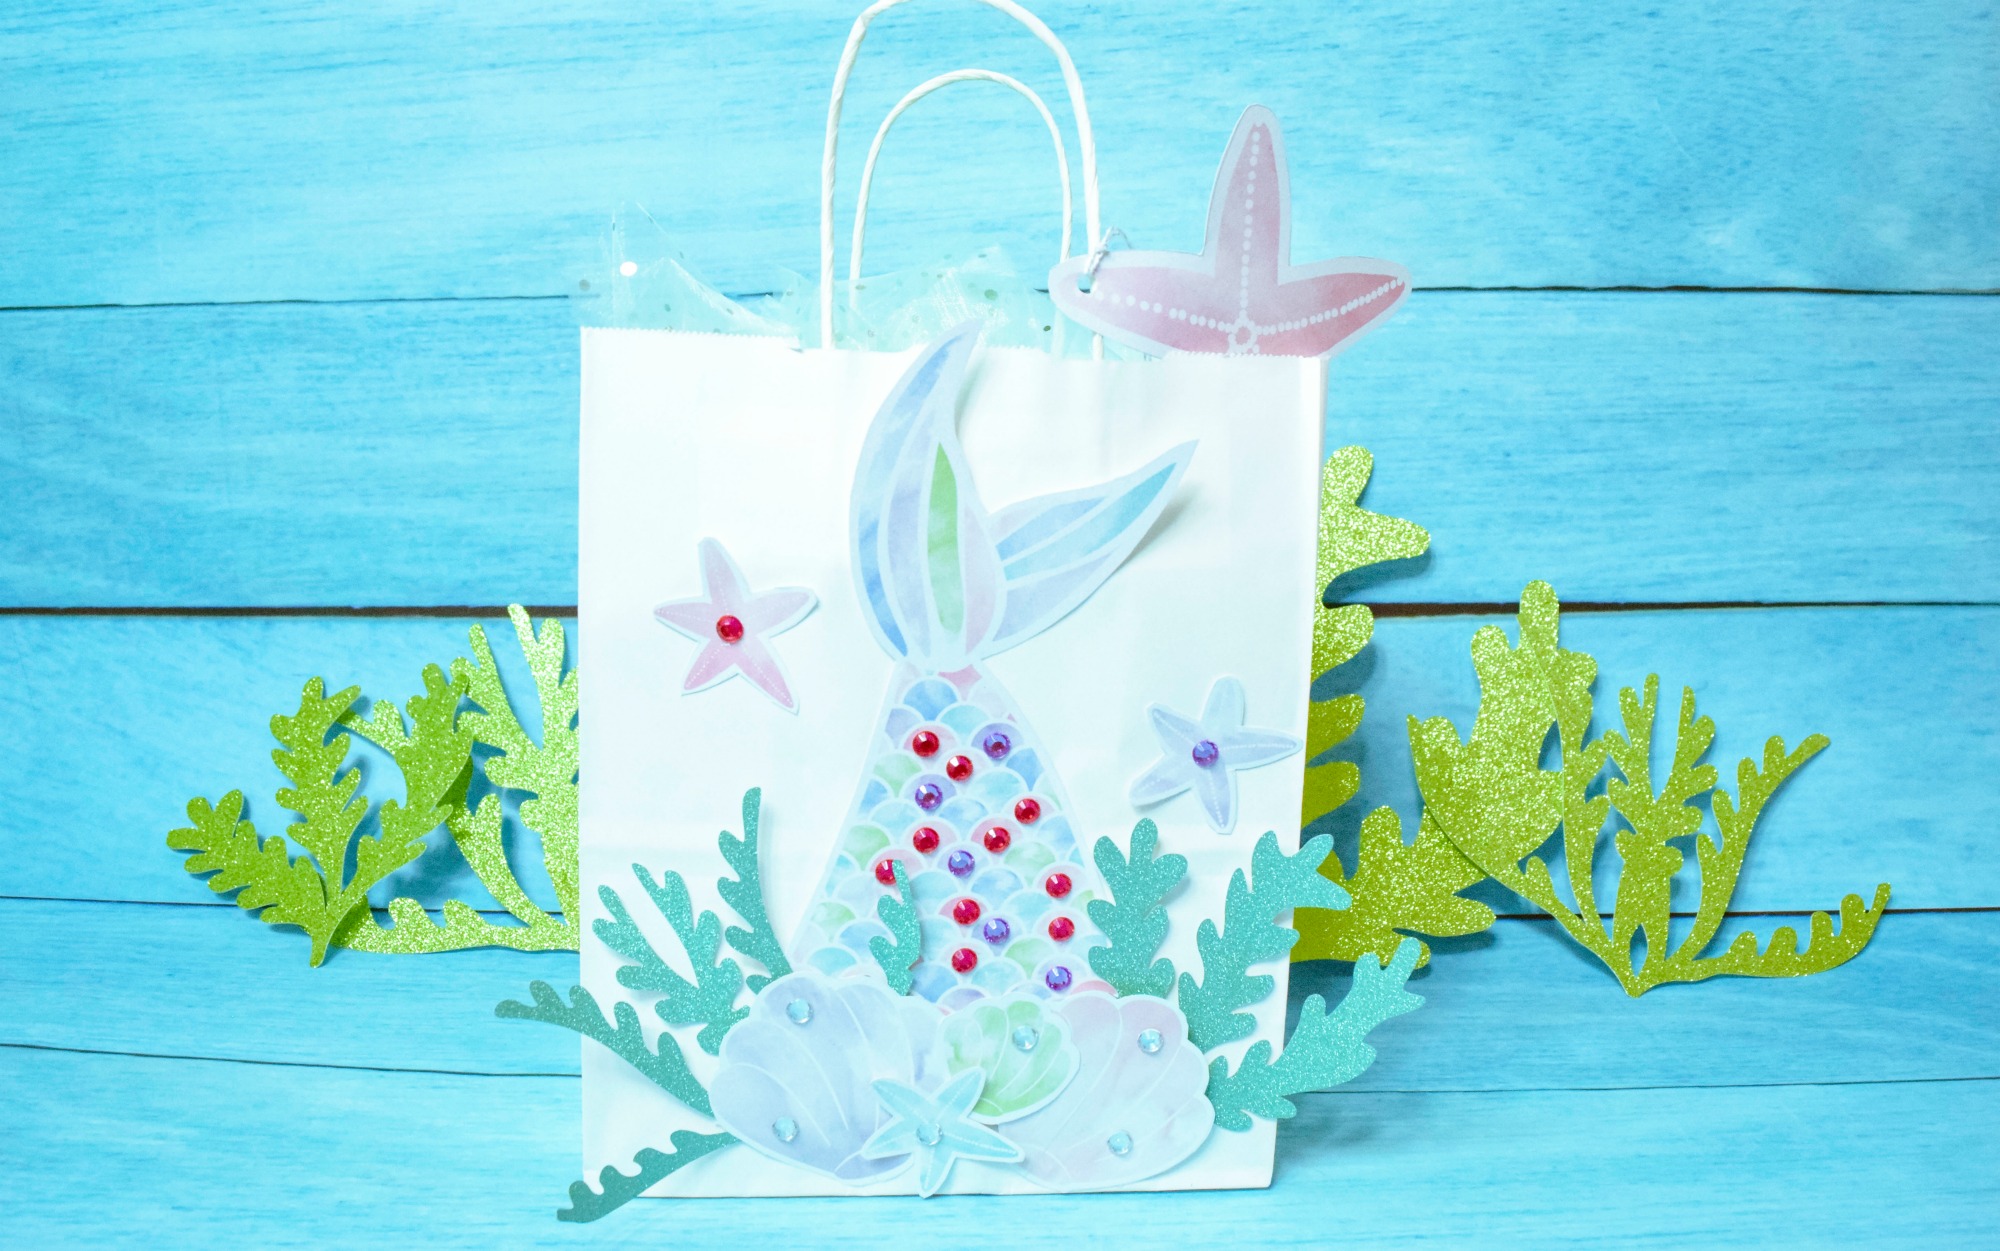 A DIY mermaid gift bag created with colorful paper cutouts - a mermaid tail, seaweed cutouts, seashells, and starfish.